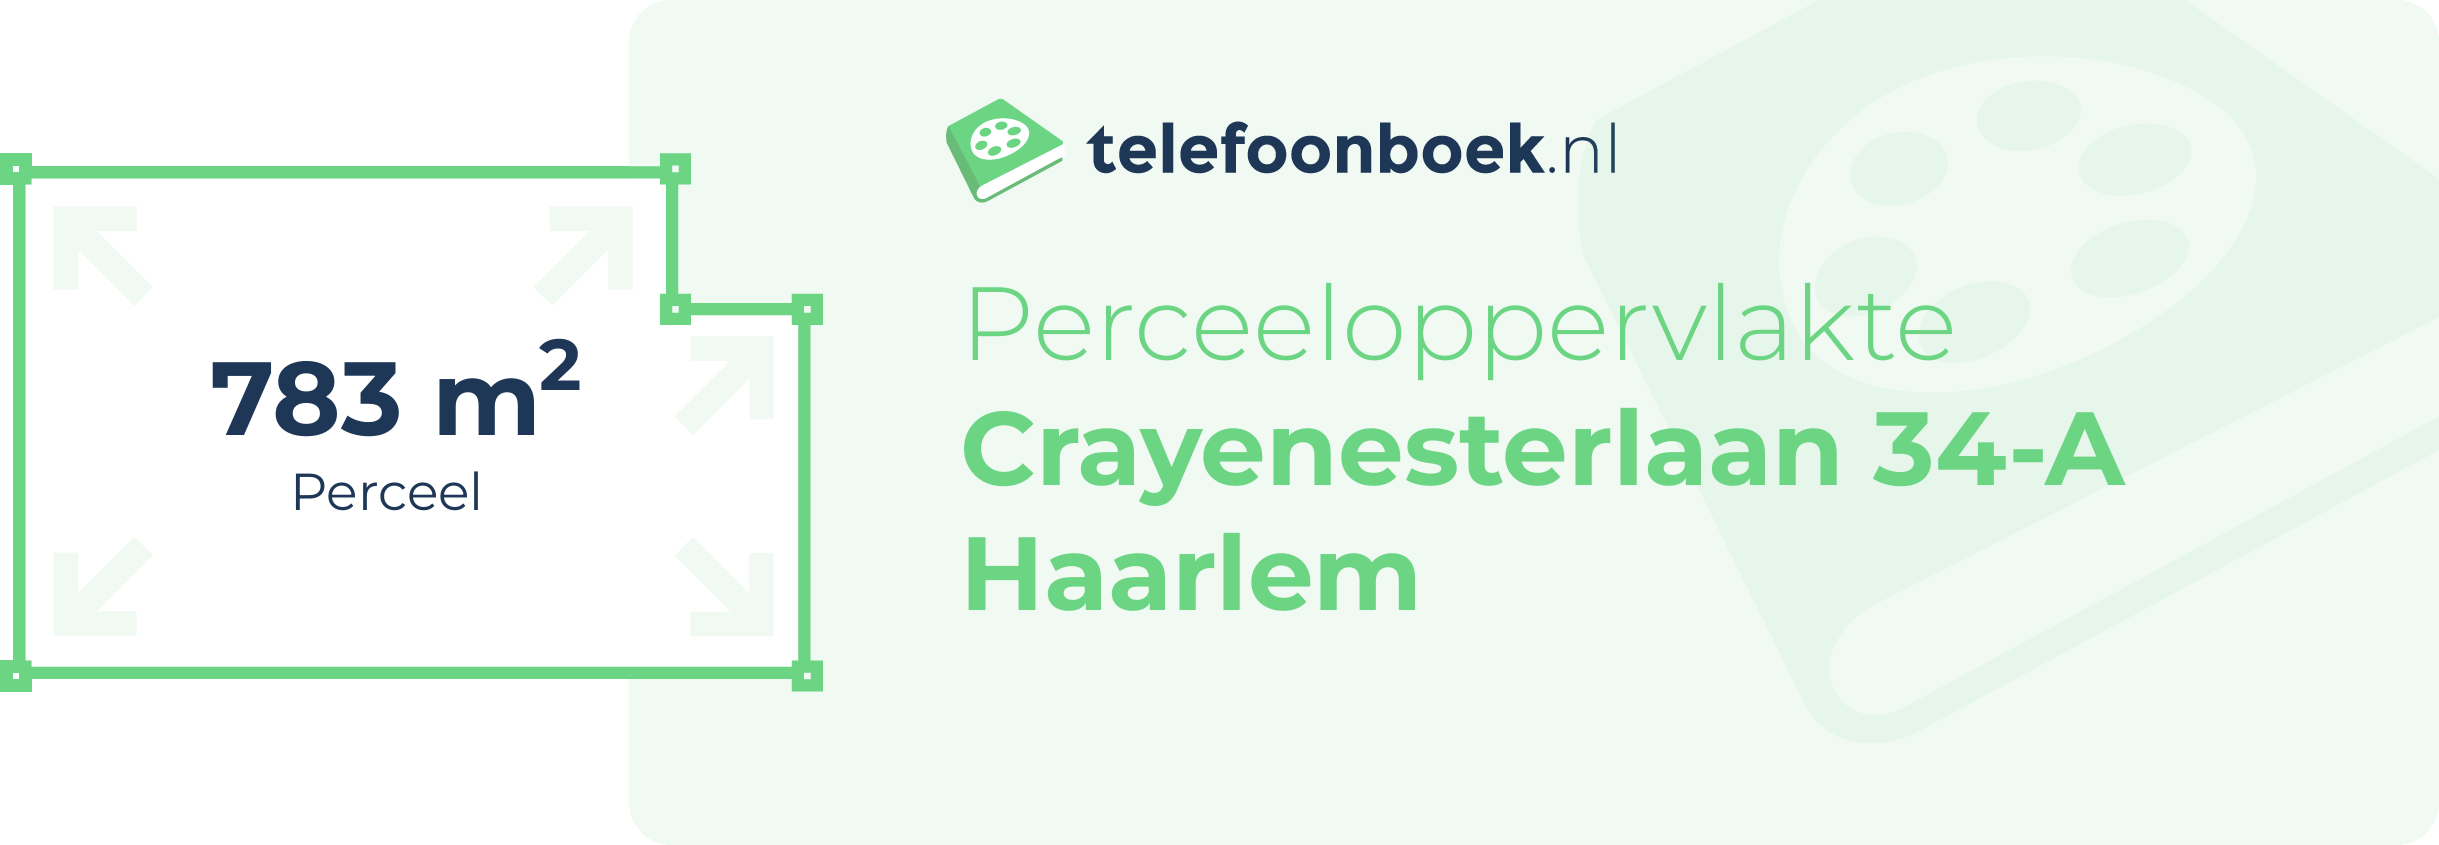 Perceeloppervlakte Crayenesterlaan 34-A Haarlem